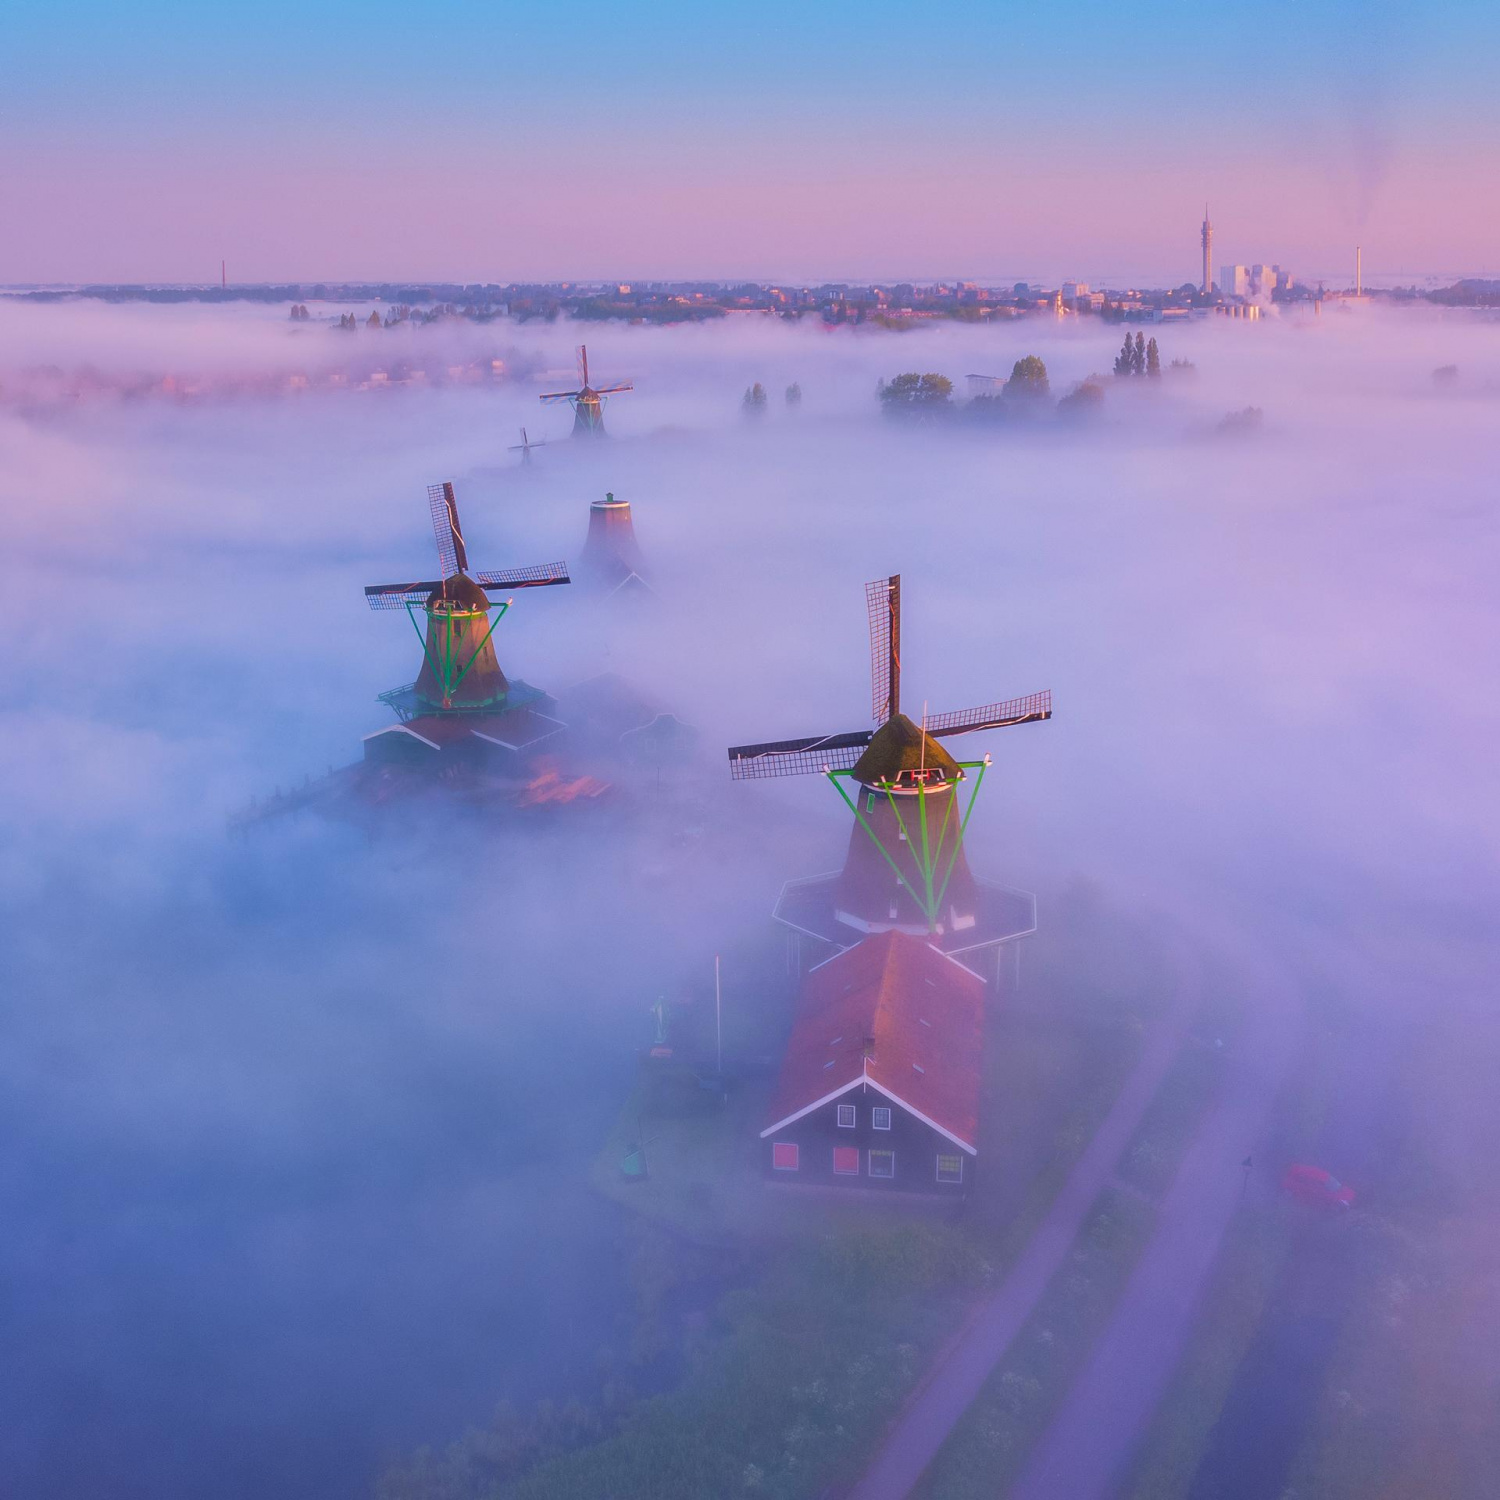 Zaanse Schans, Netherlands, photo by Albert Dros